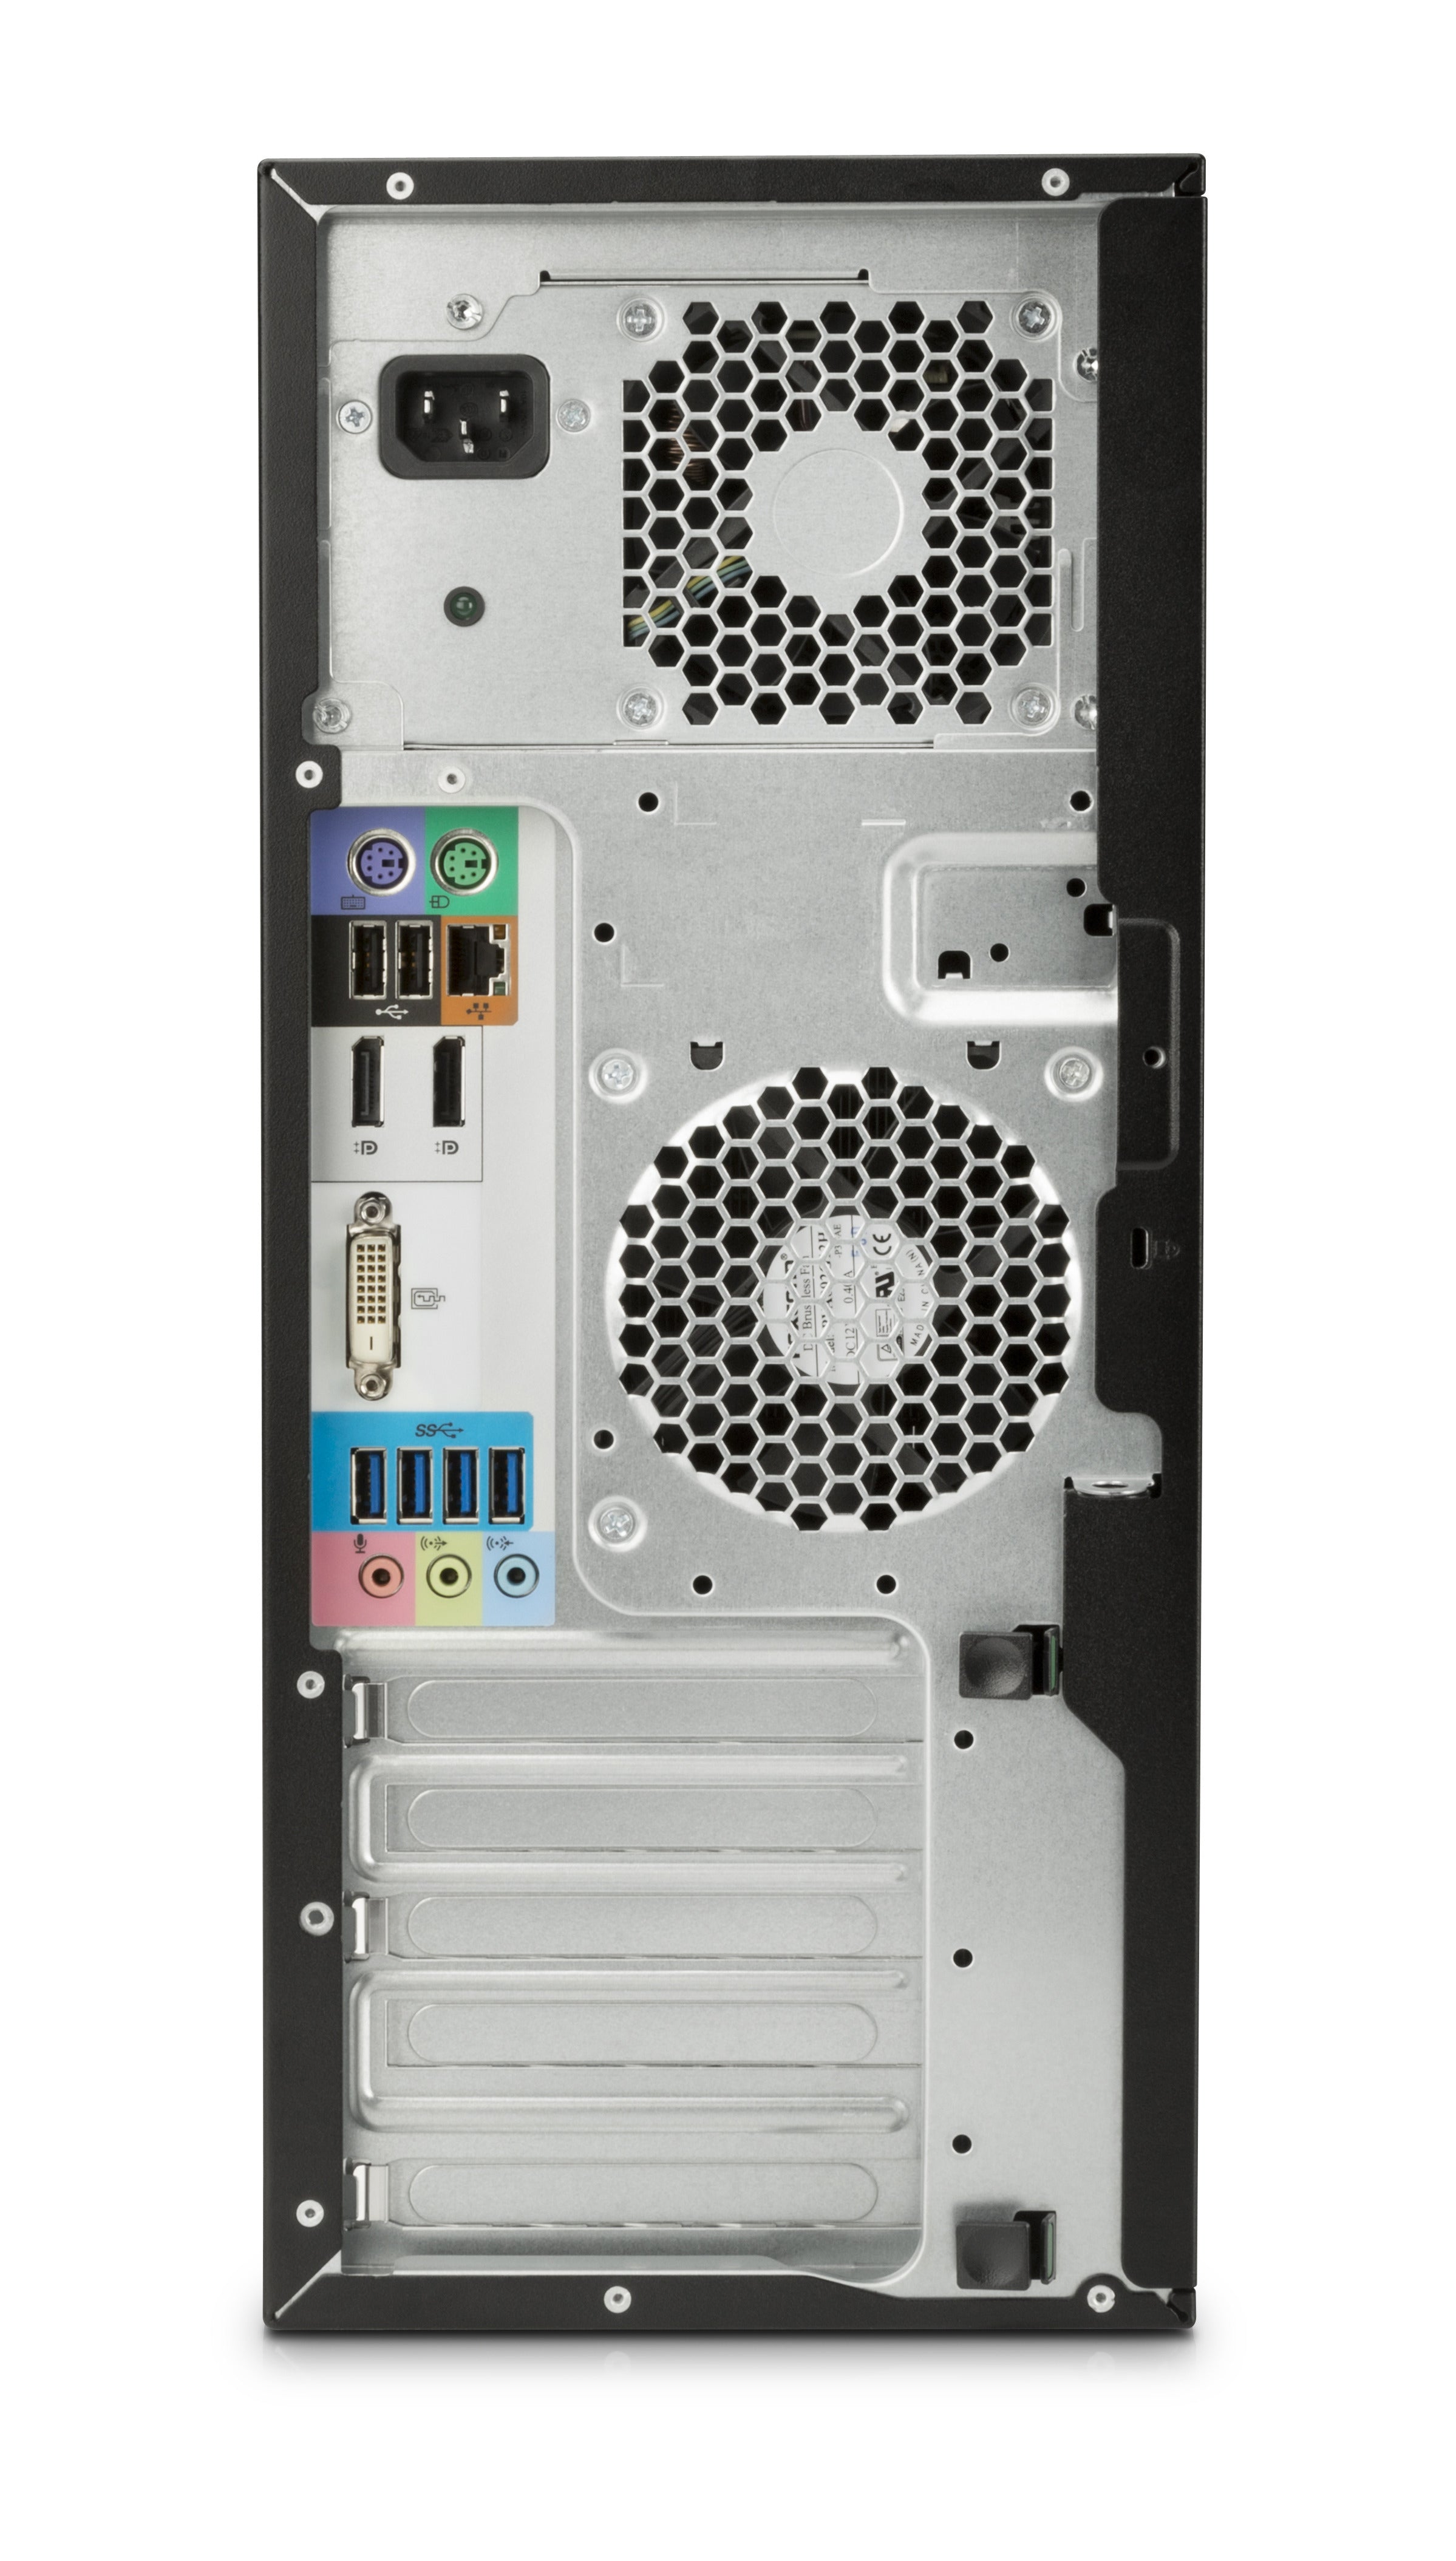 HP Z240 Workstation Tower ricondizionata | Intel Xeon E3-1245 V5 | Windows 11 Pro